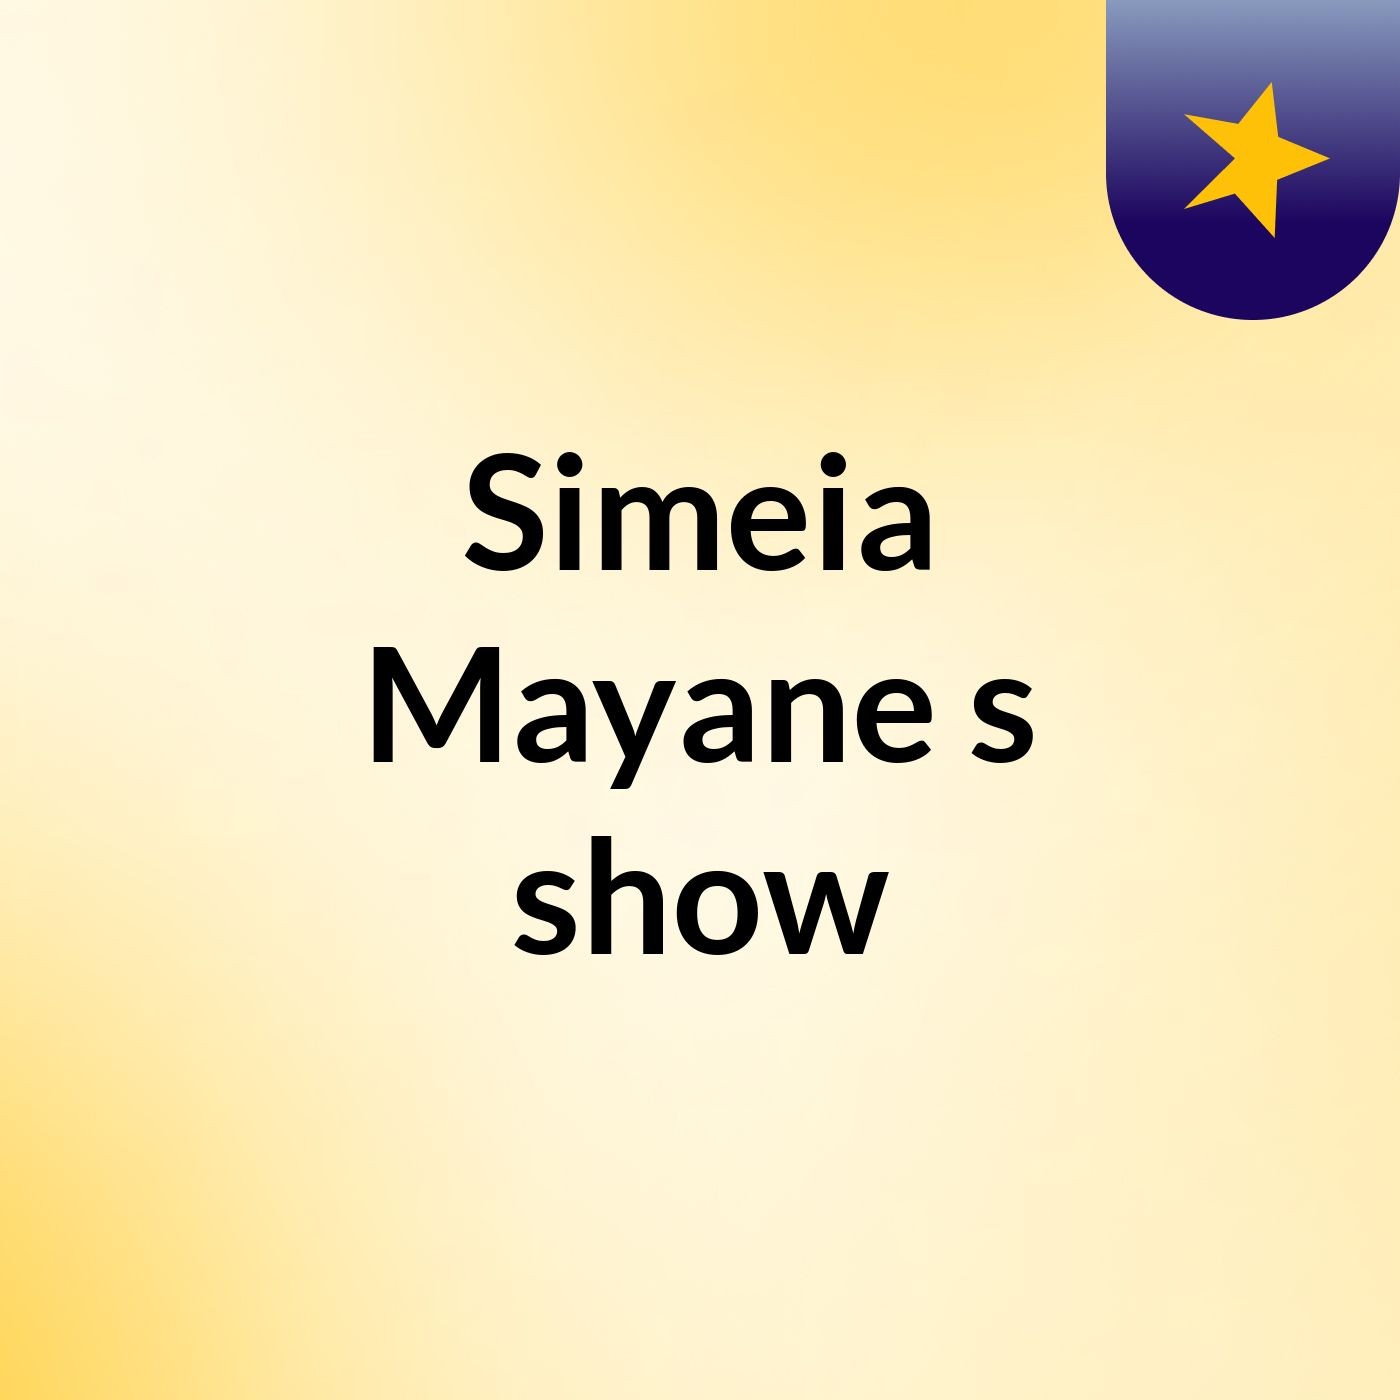 Simeia Mayane's show